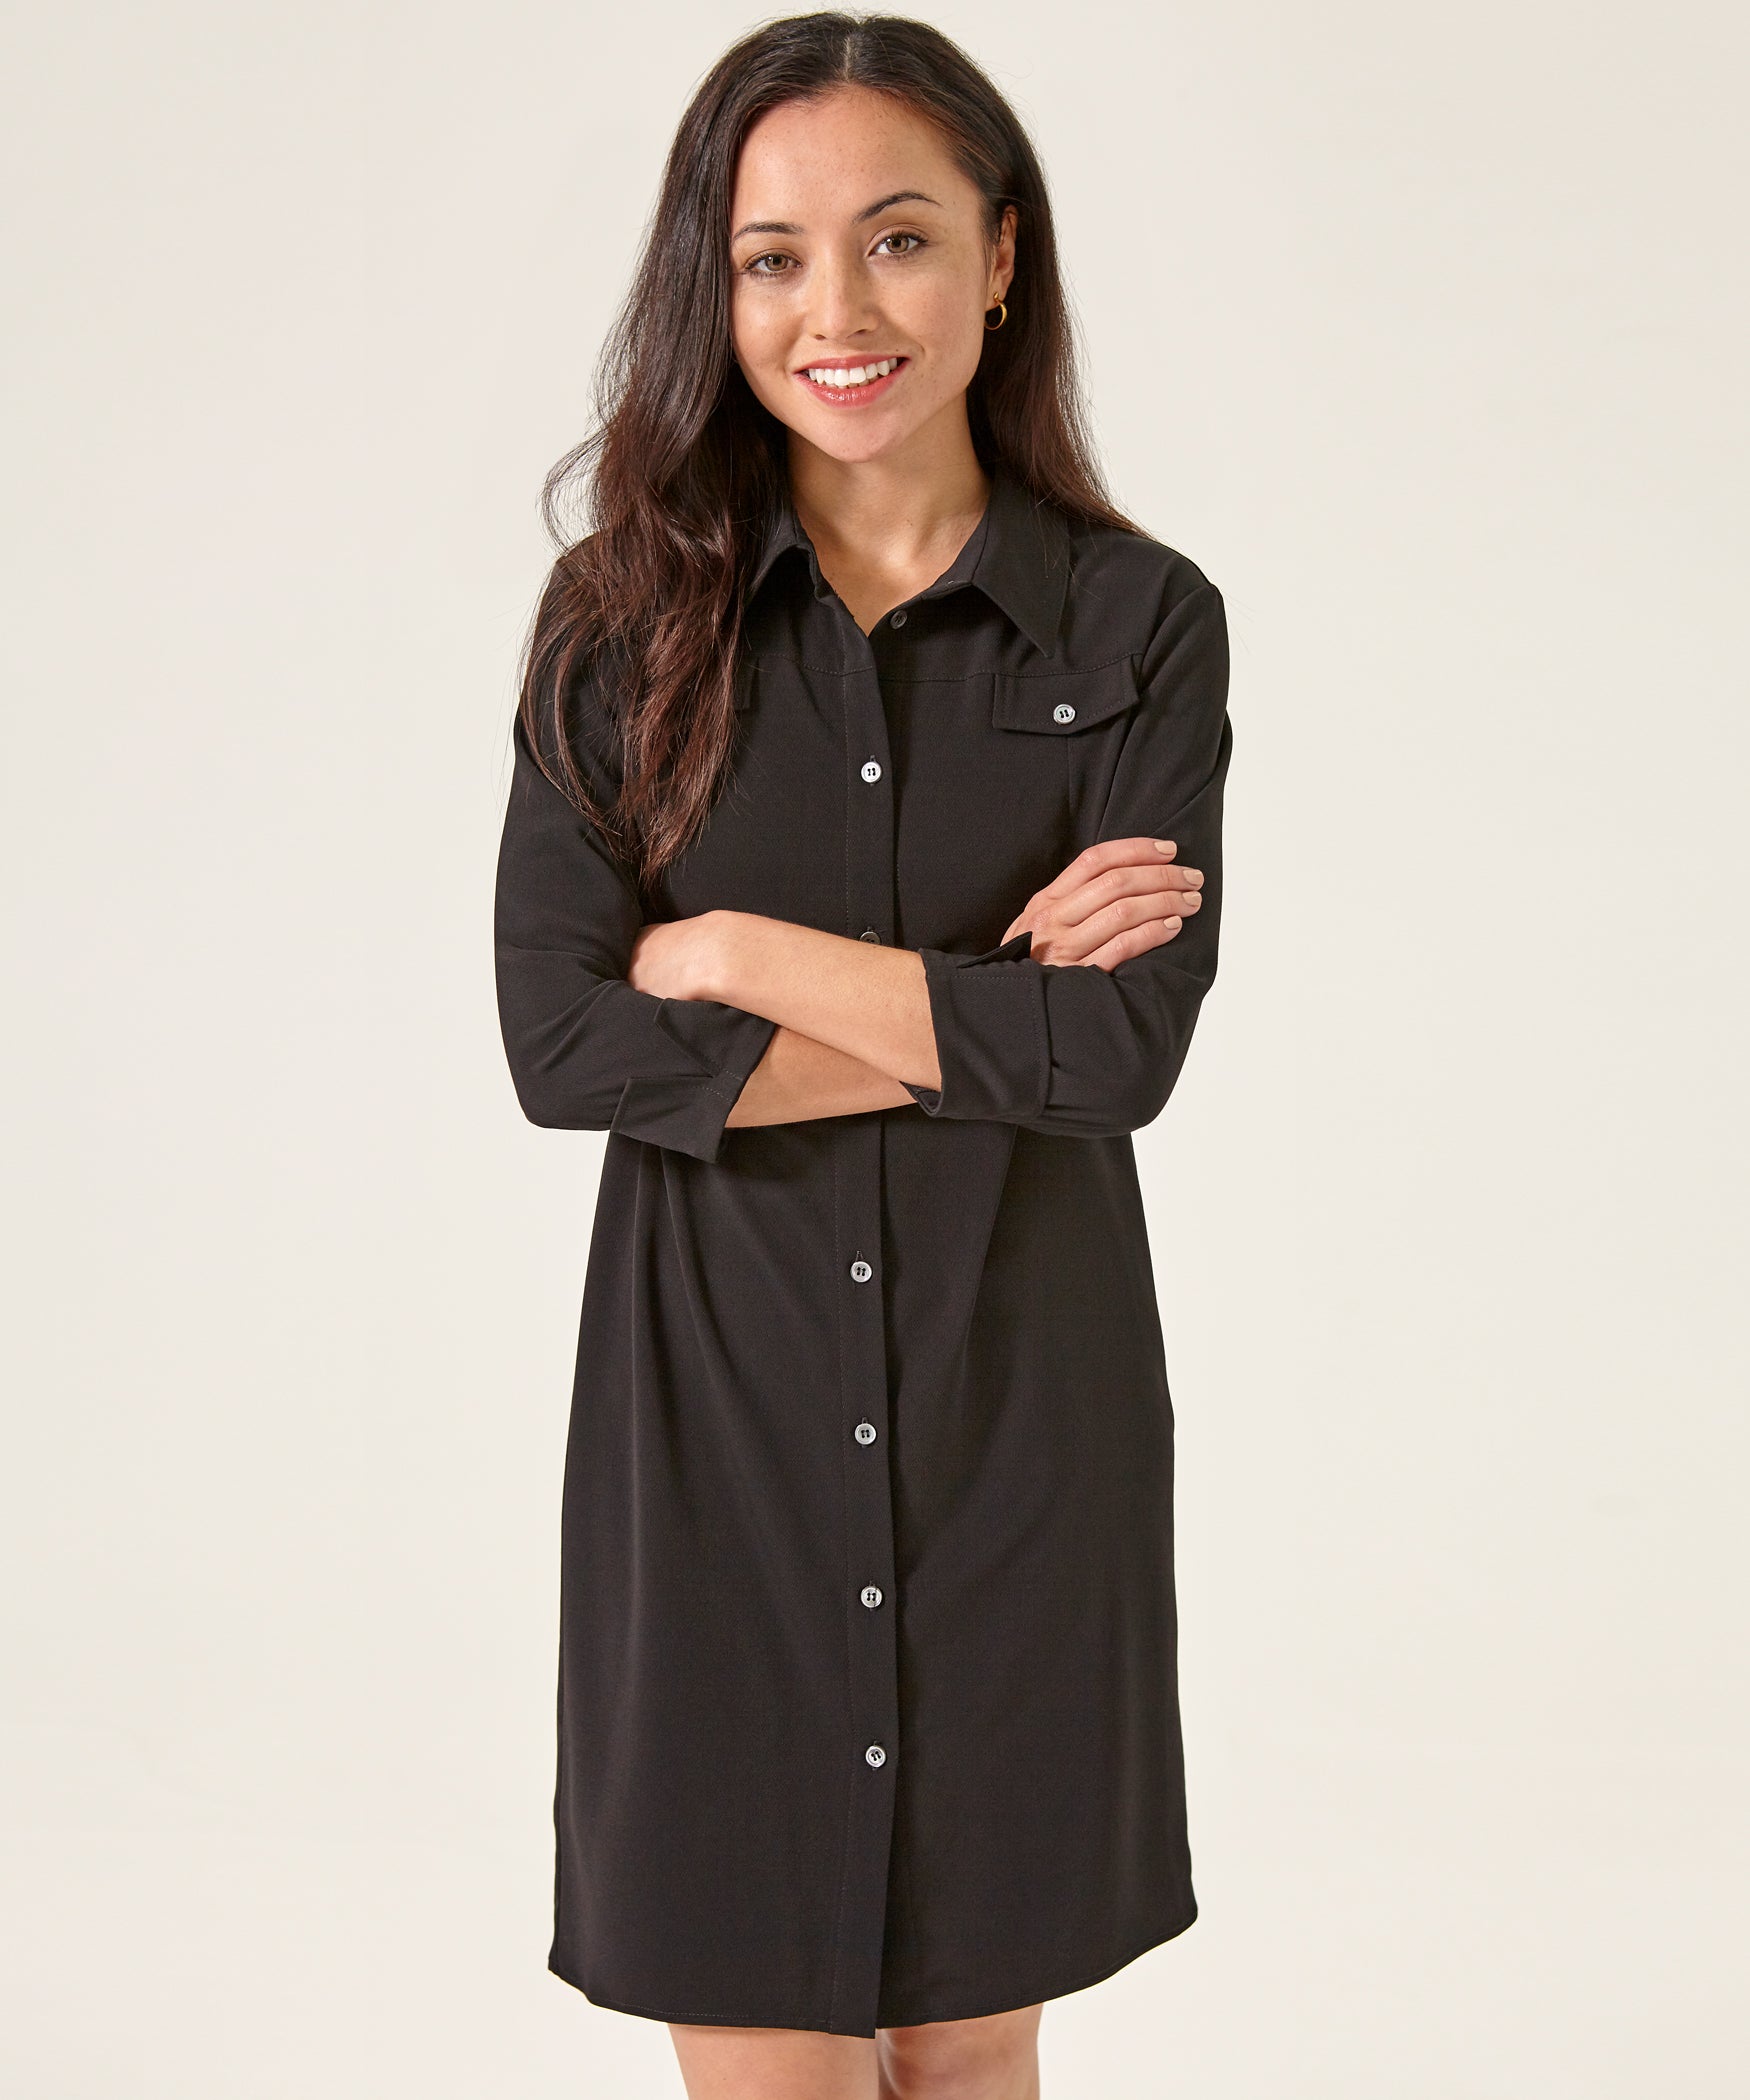  Petite  Black Shirt  Dress  3 4 Length Sleeves Made In The UK 